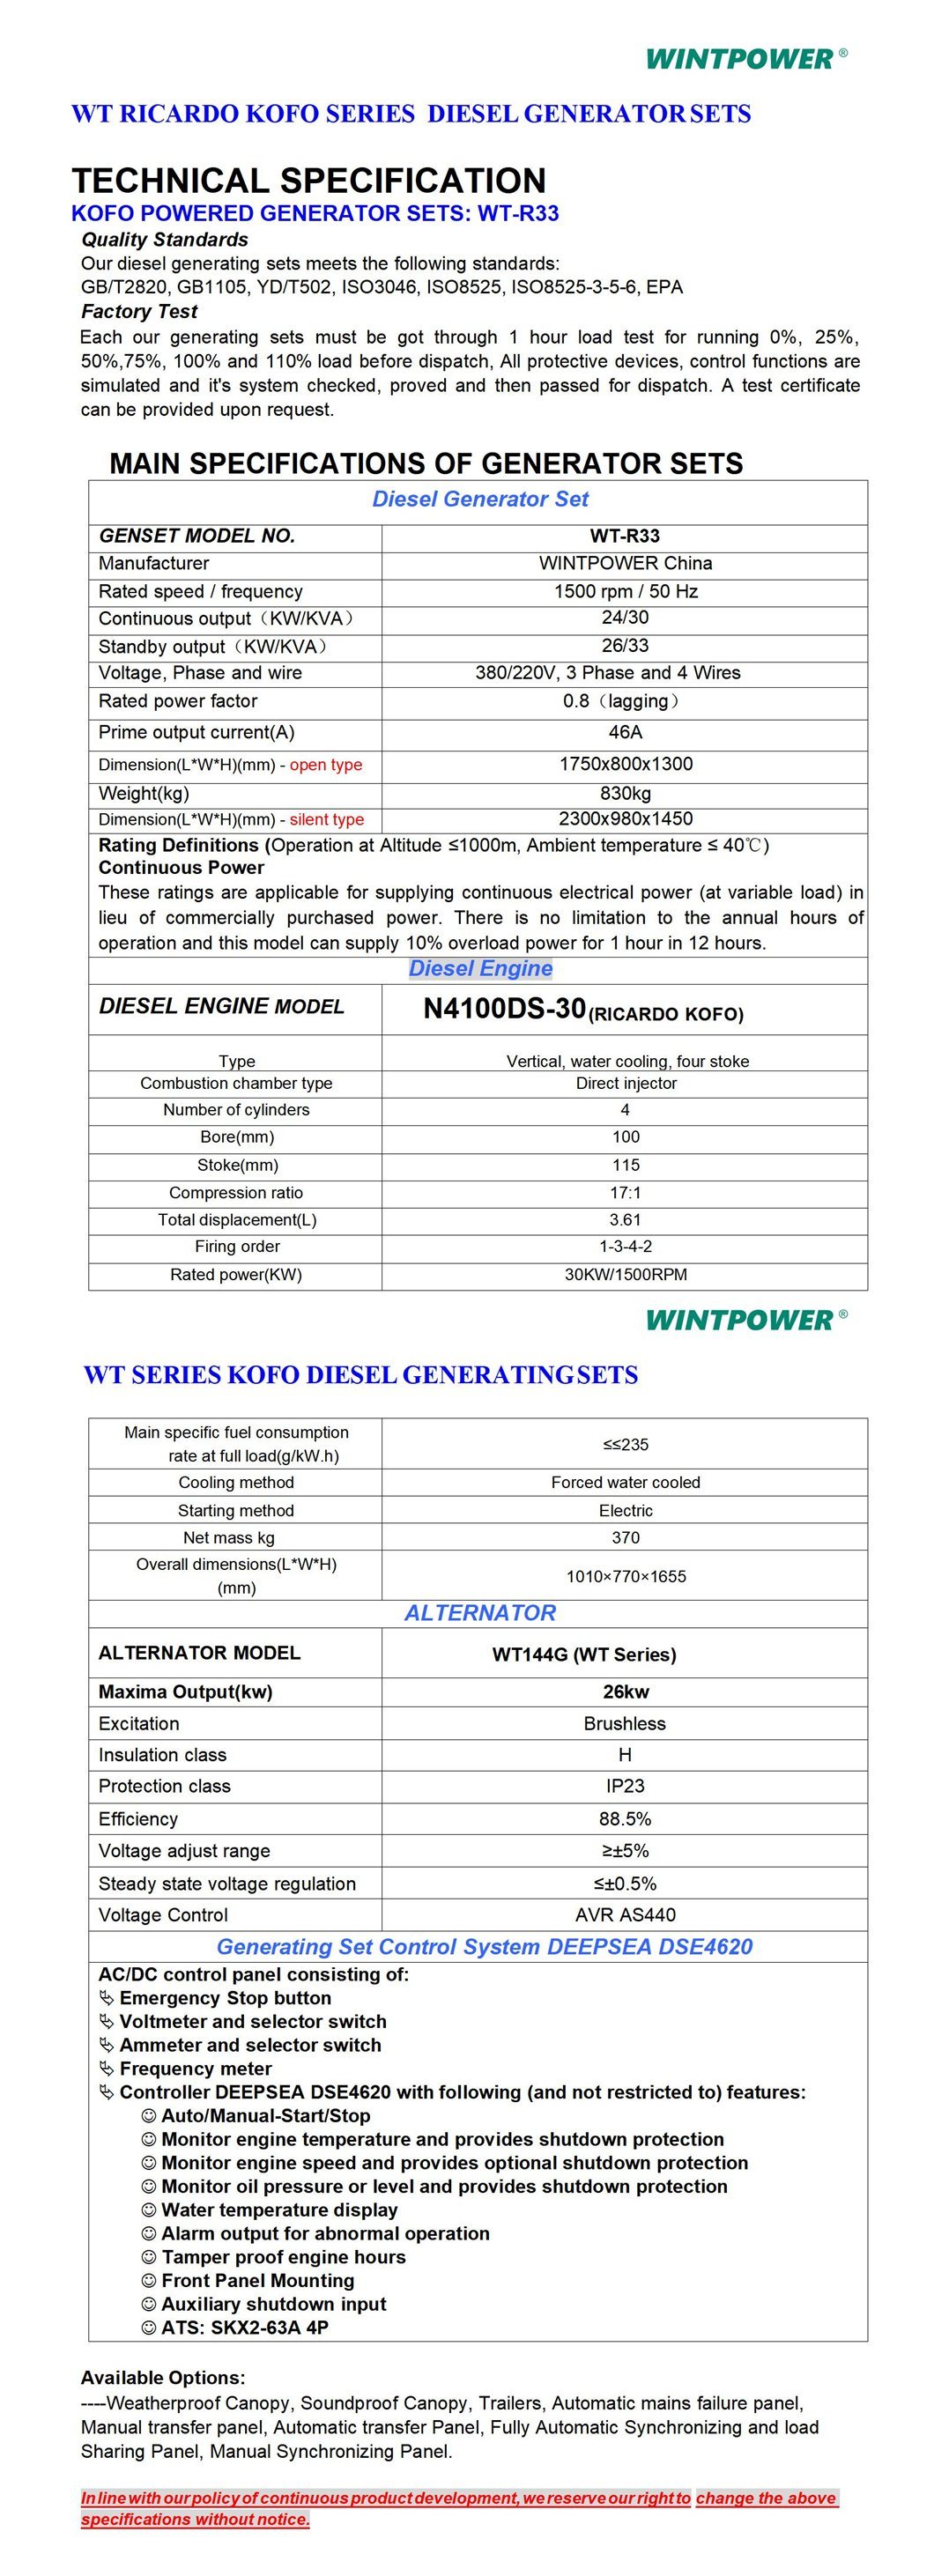 Weichai Kofo Ricardo Motor Diesel Grupo electrógeno Dg Genset 60kVA N4105zds Tipo silencioso insonorizado 400/230V 380/220V 208/110V 440V 480V 600V 50Hz 60Hz